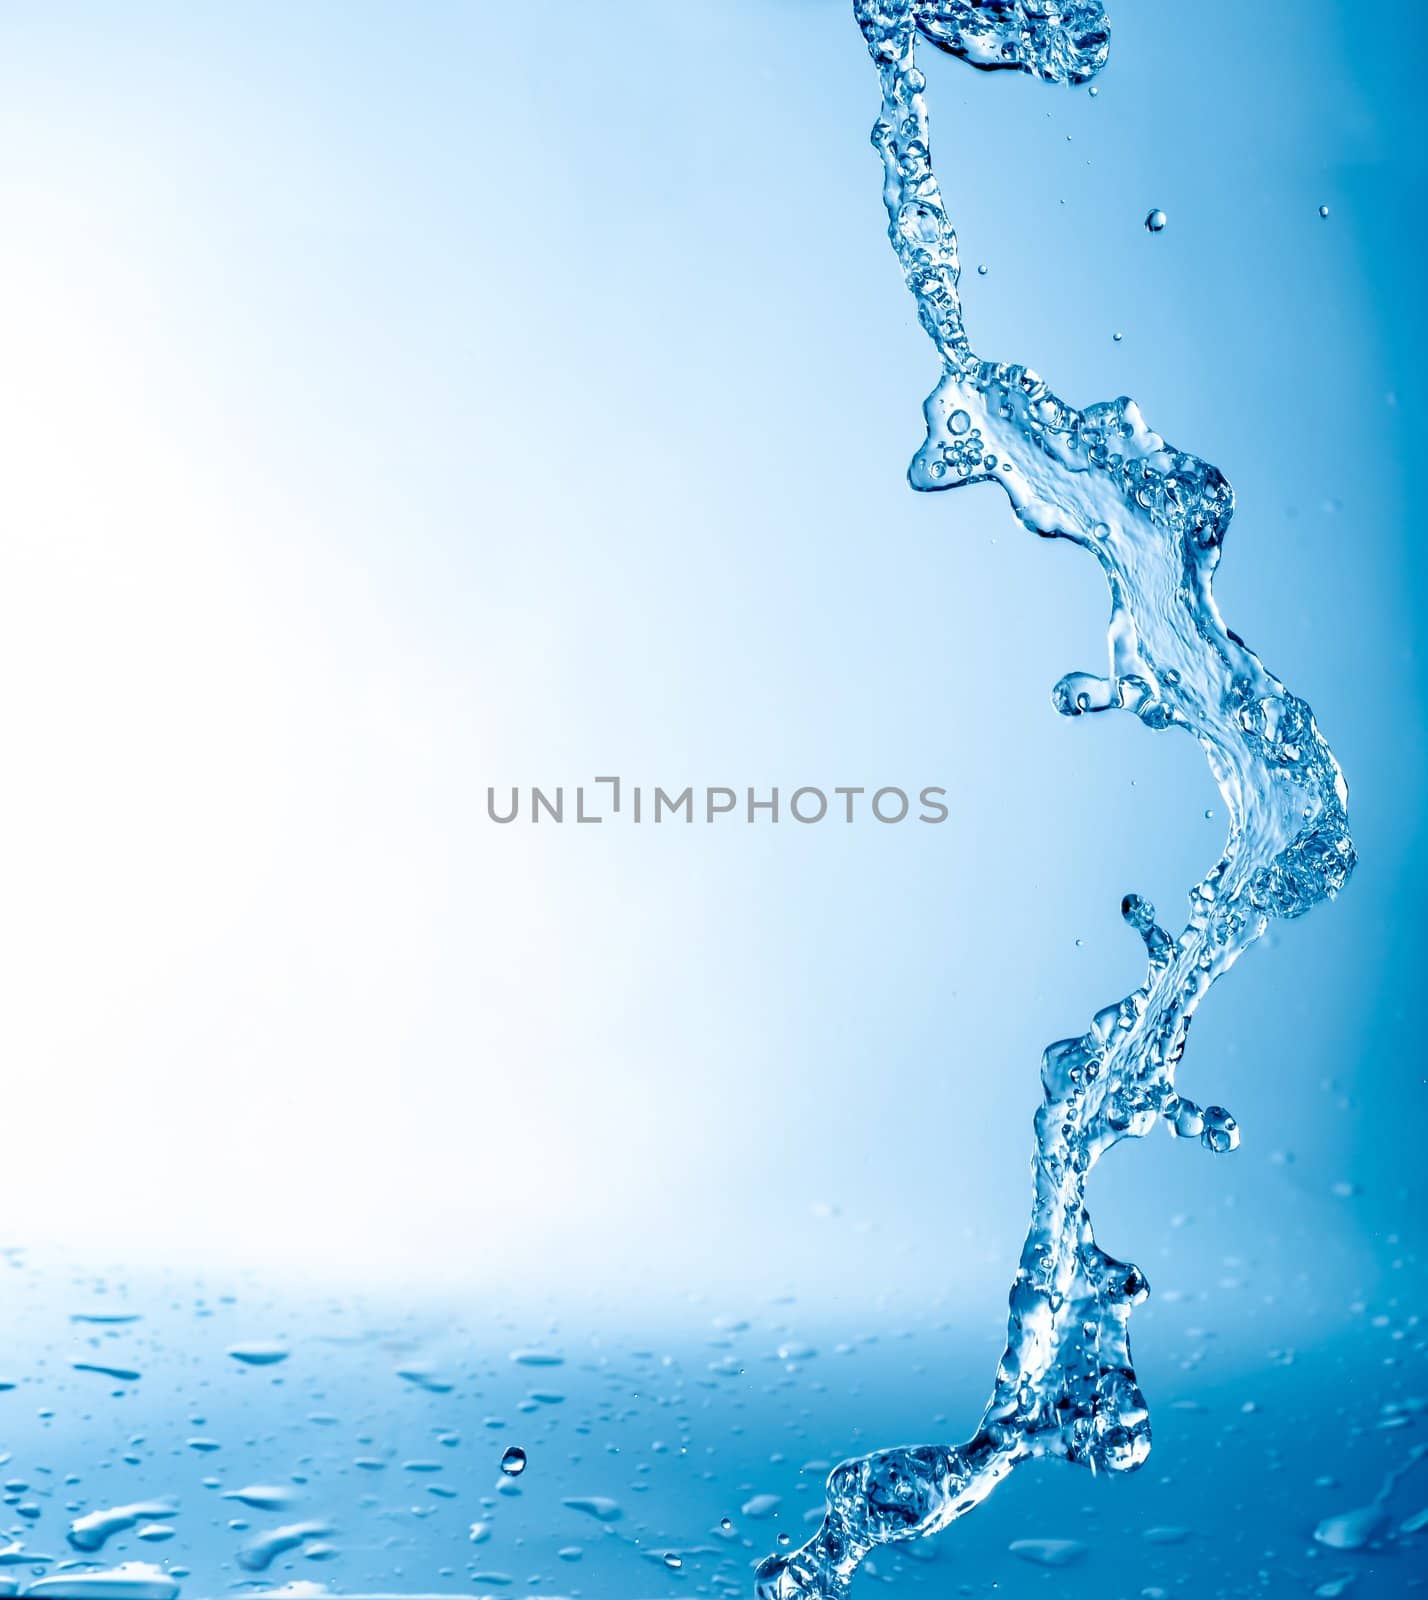 background with blue splash water